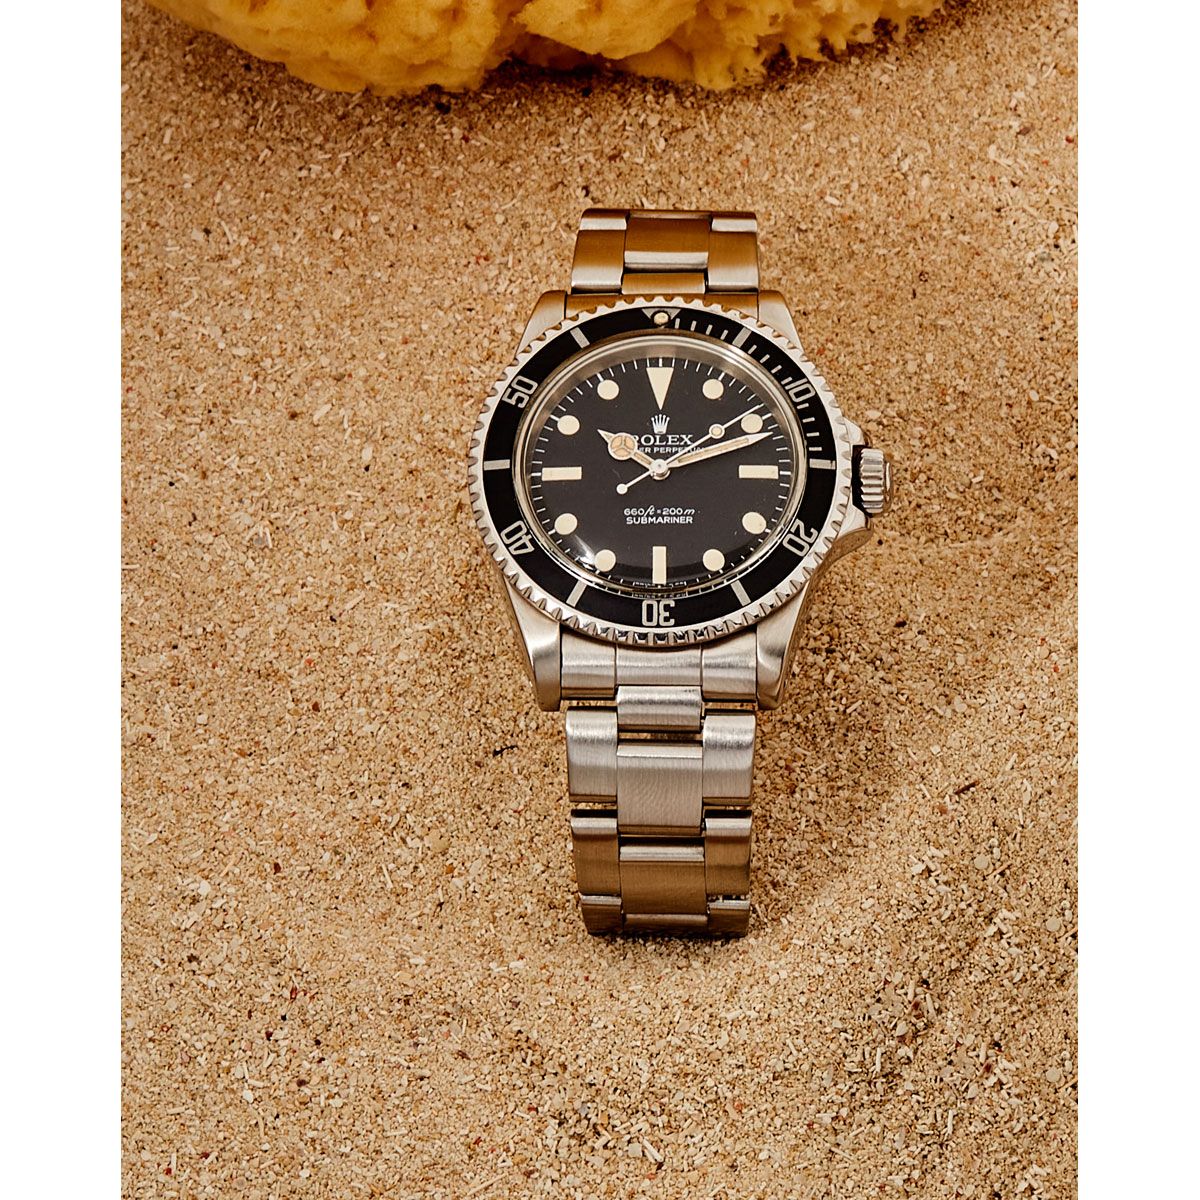 Null Rolex, Submariner, Ref 5513, n° 5150xxxx, vers 1978


Une montre de plongée&hellip;